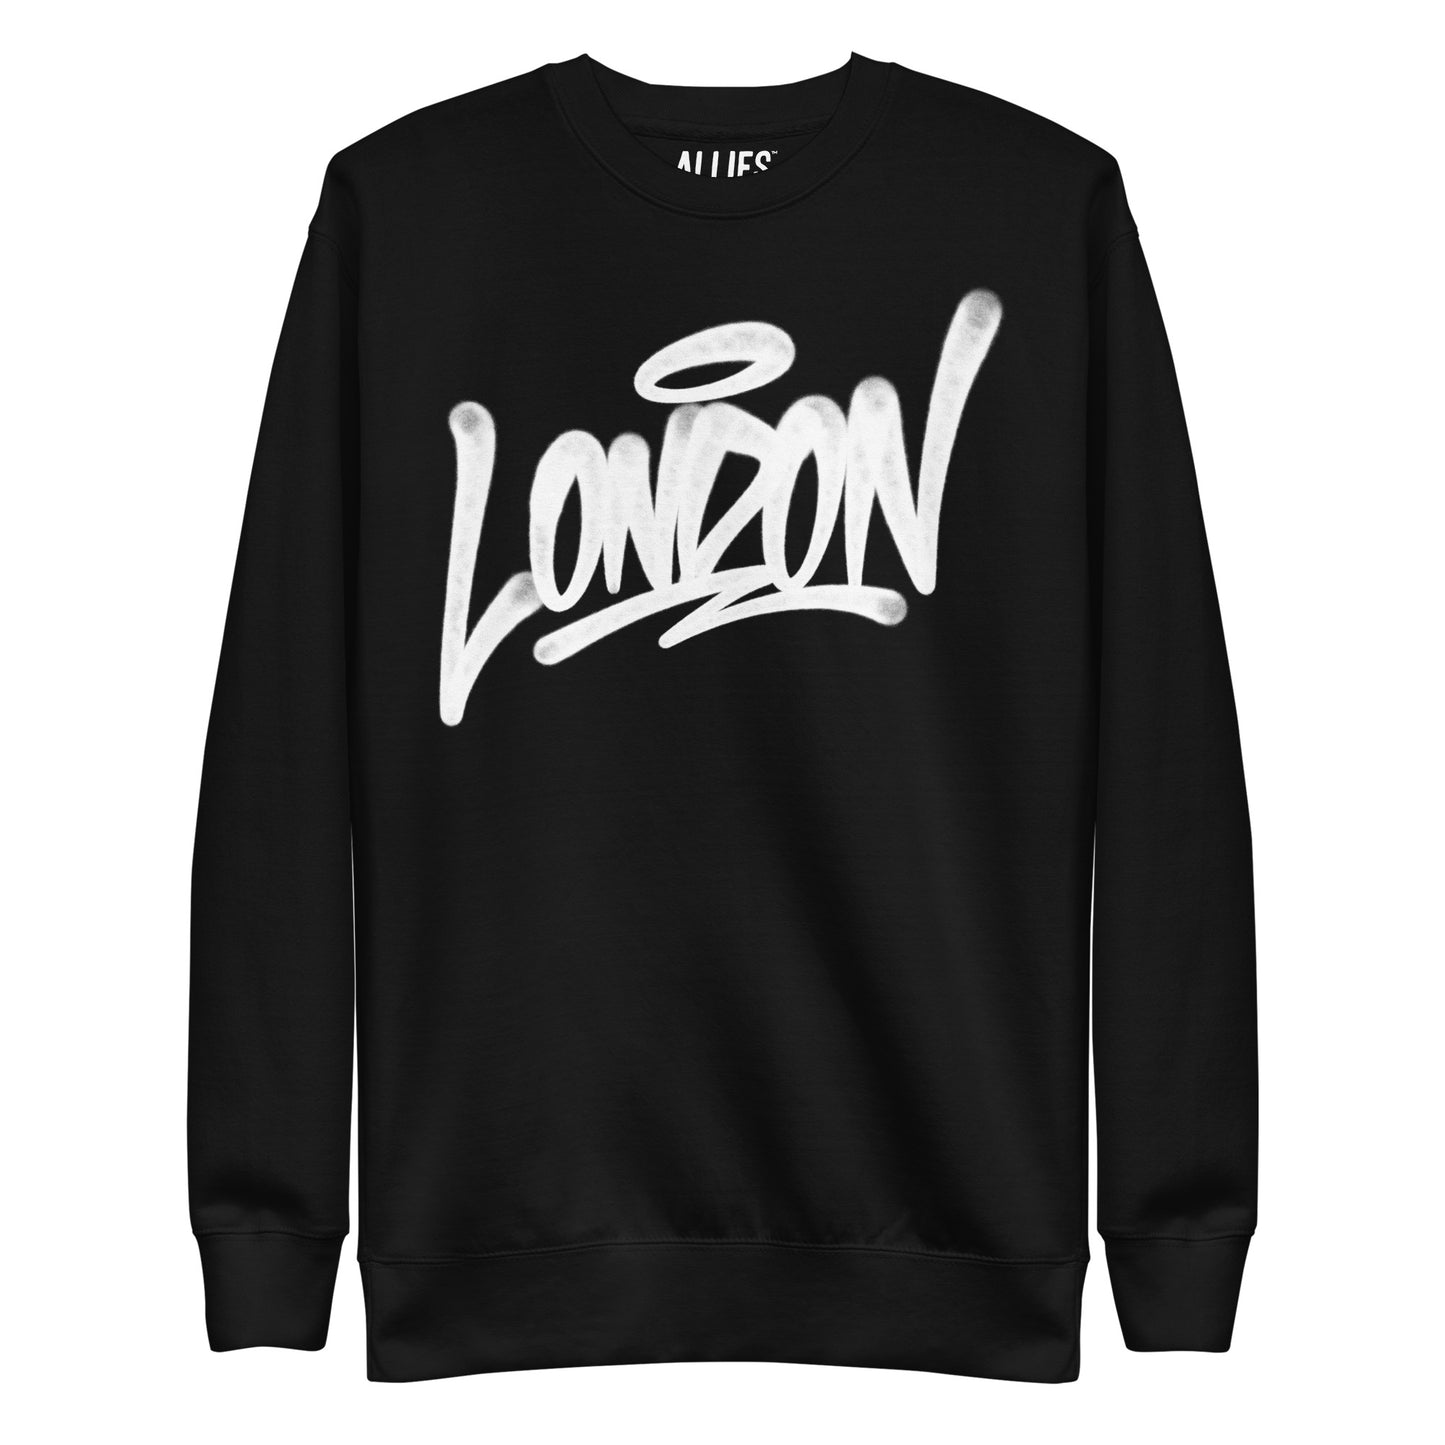 London Handstyle Sweatshirt